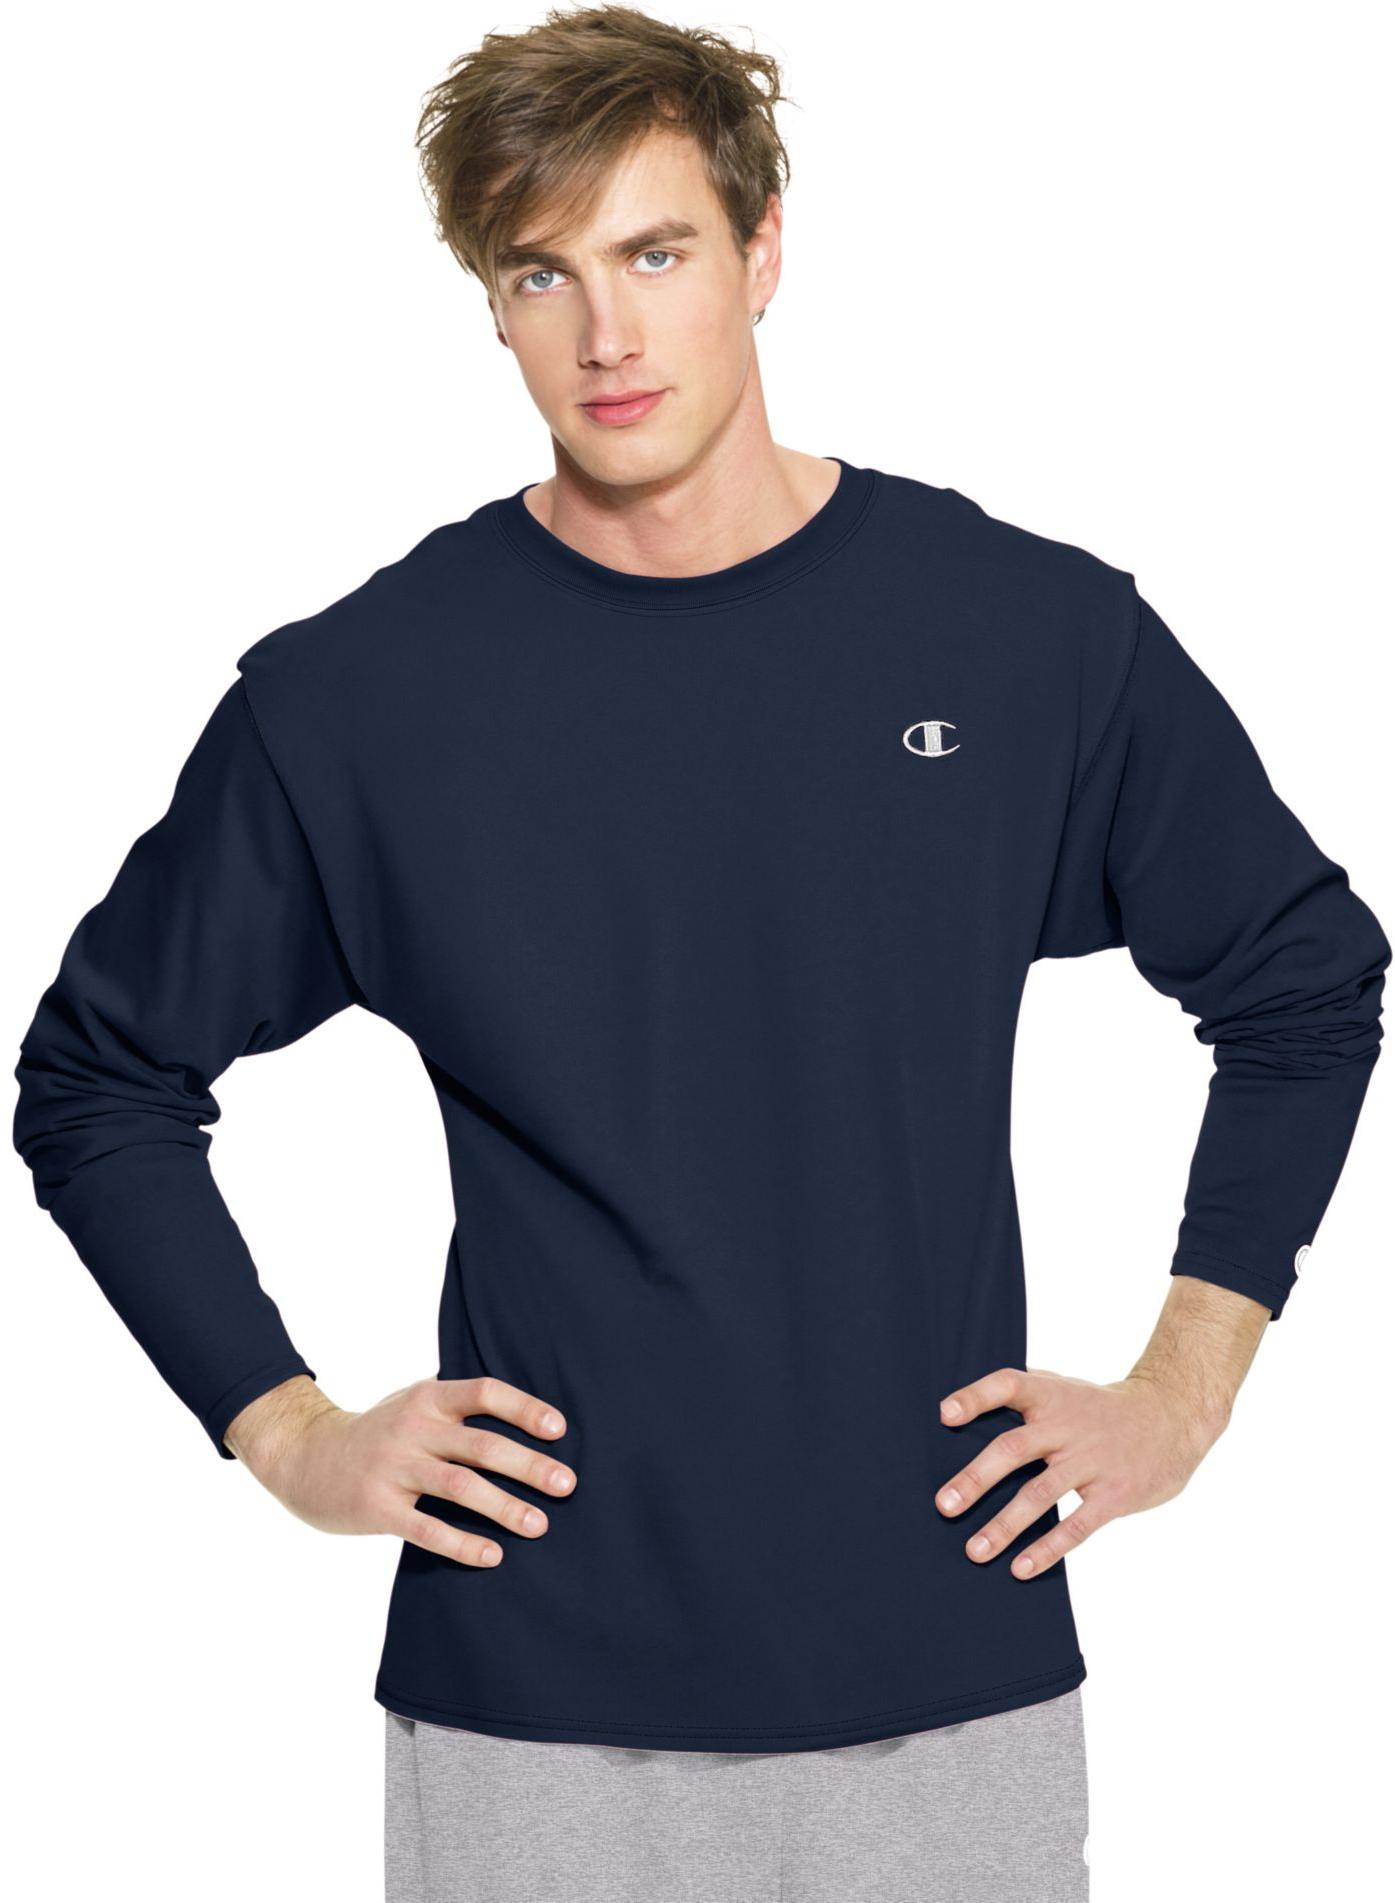 CHAMPION Cotton Jersey Long-Sleeve Men's T Shirt - T2228 | eBay